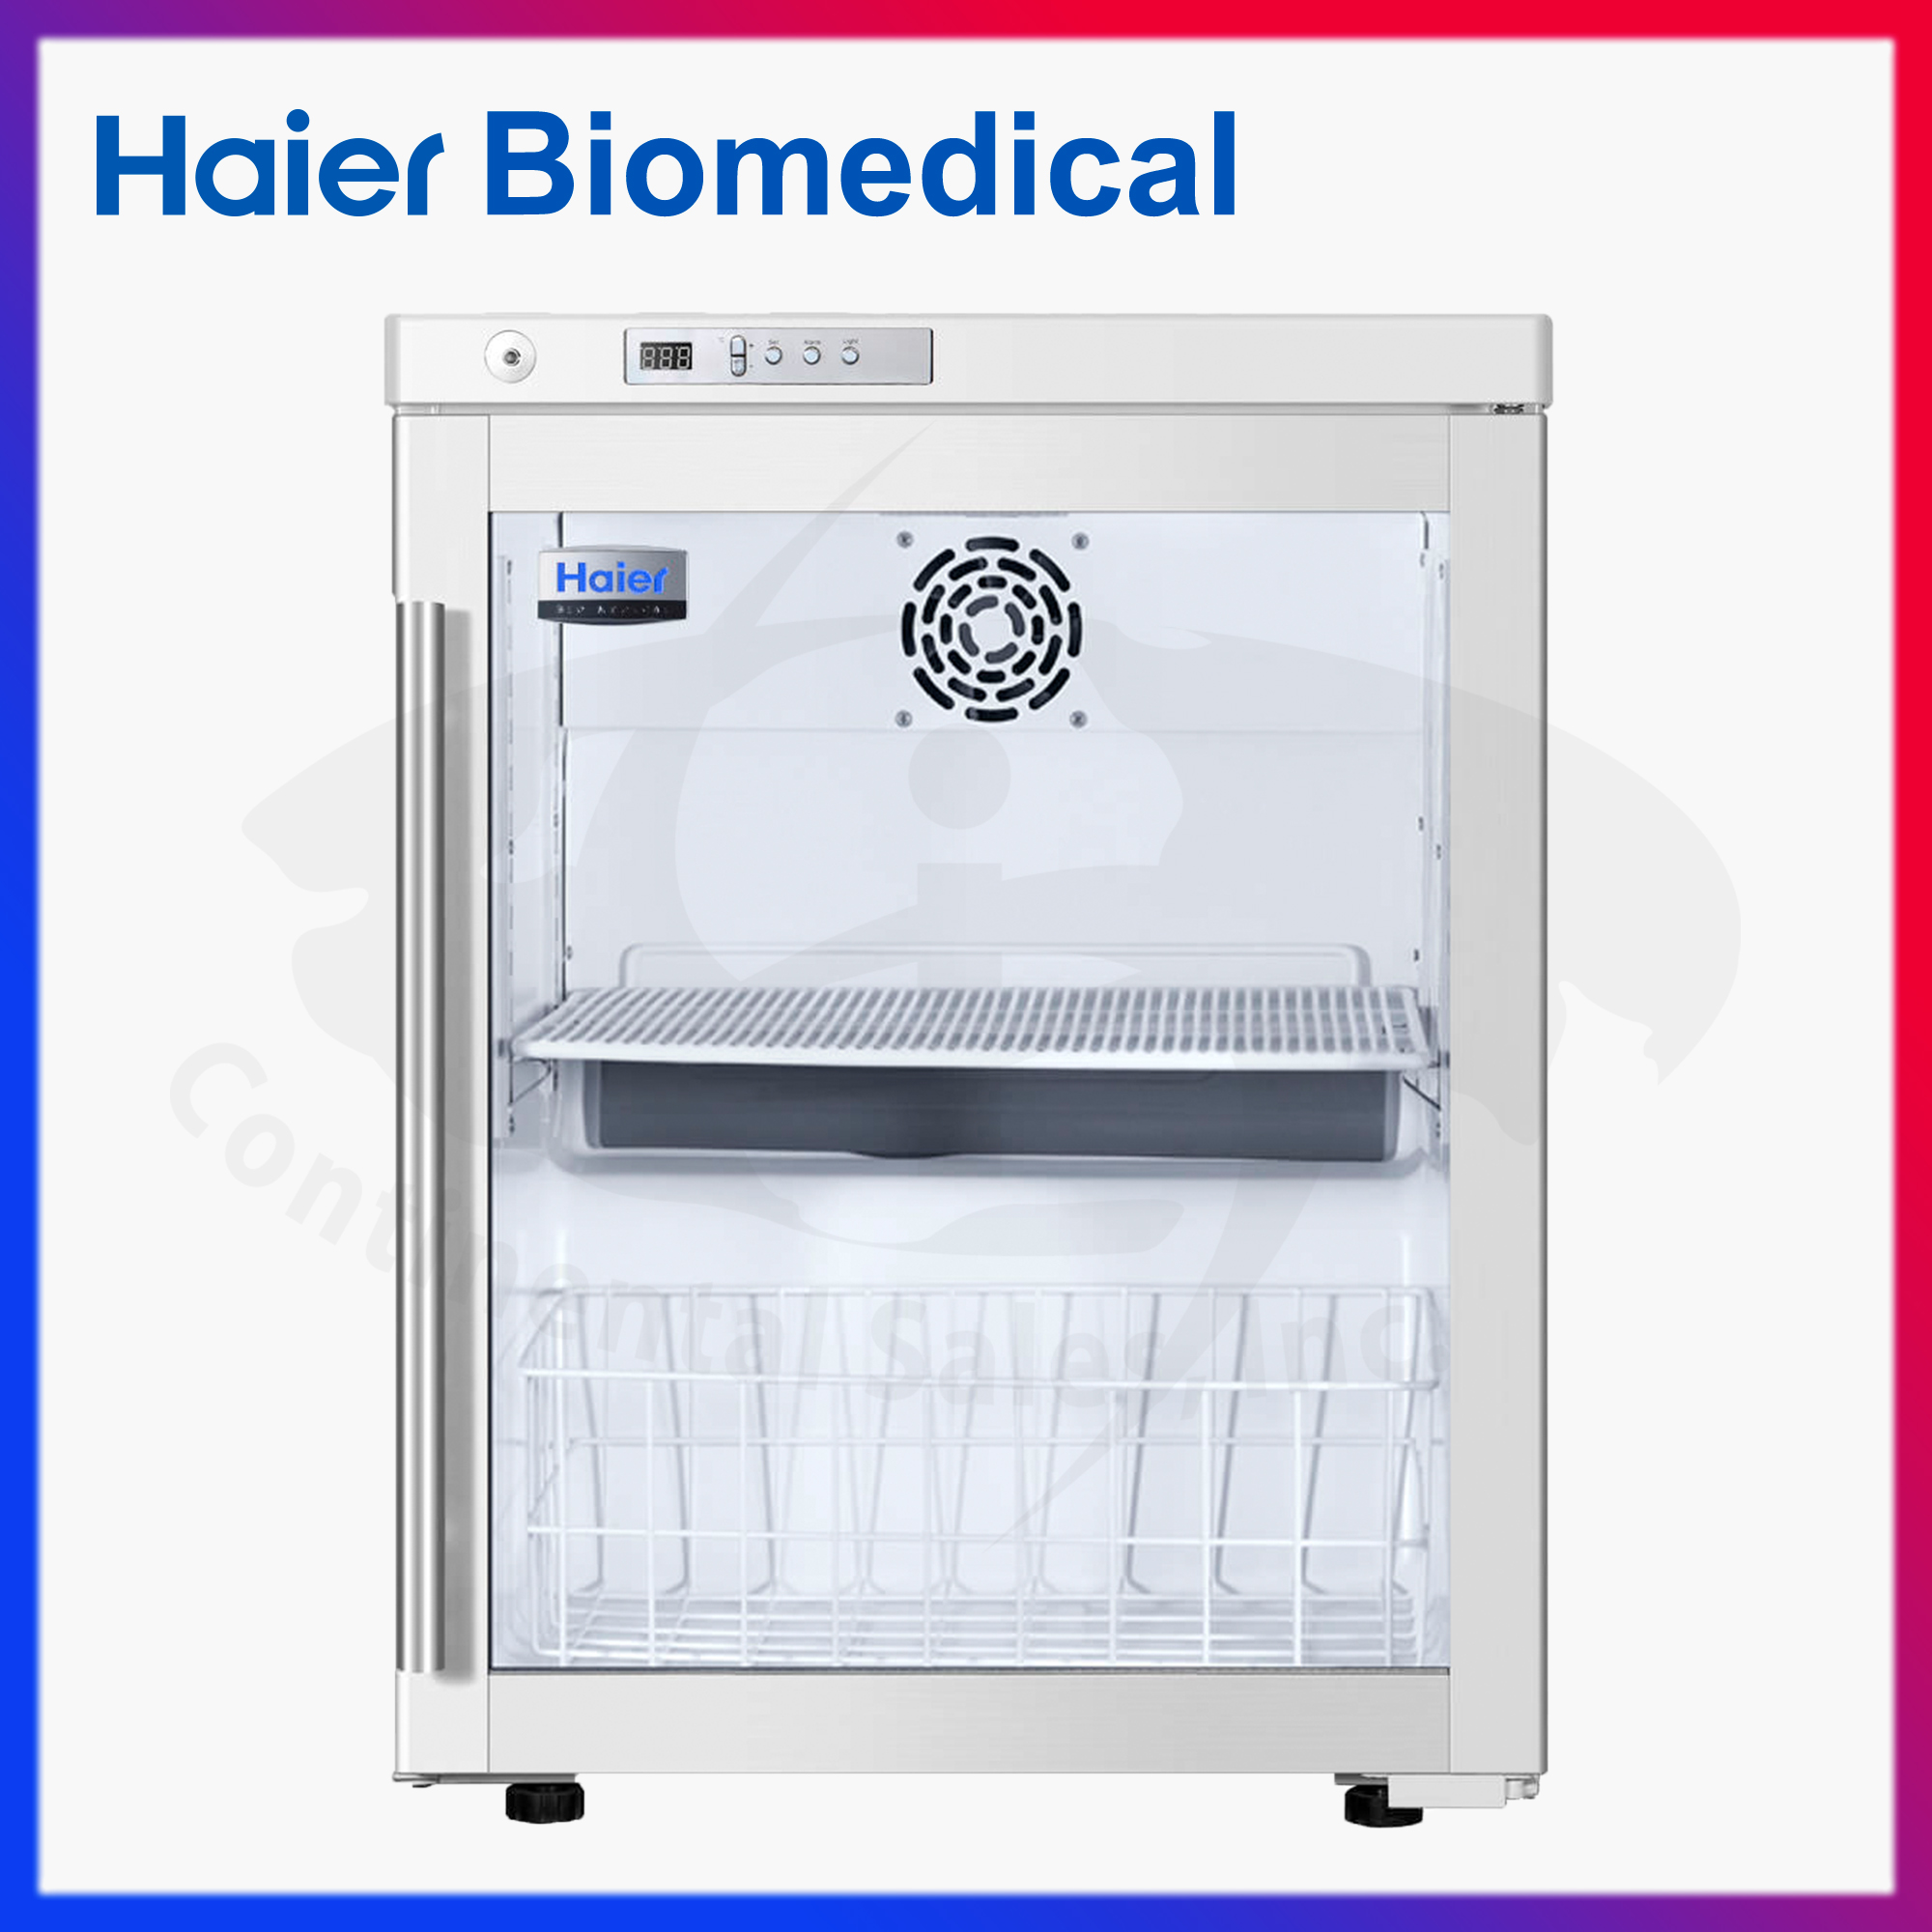 Haier Biomedical Pharmacy Refrigerator - Upright Glass Door | Lazada PH